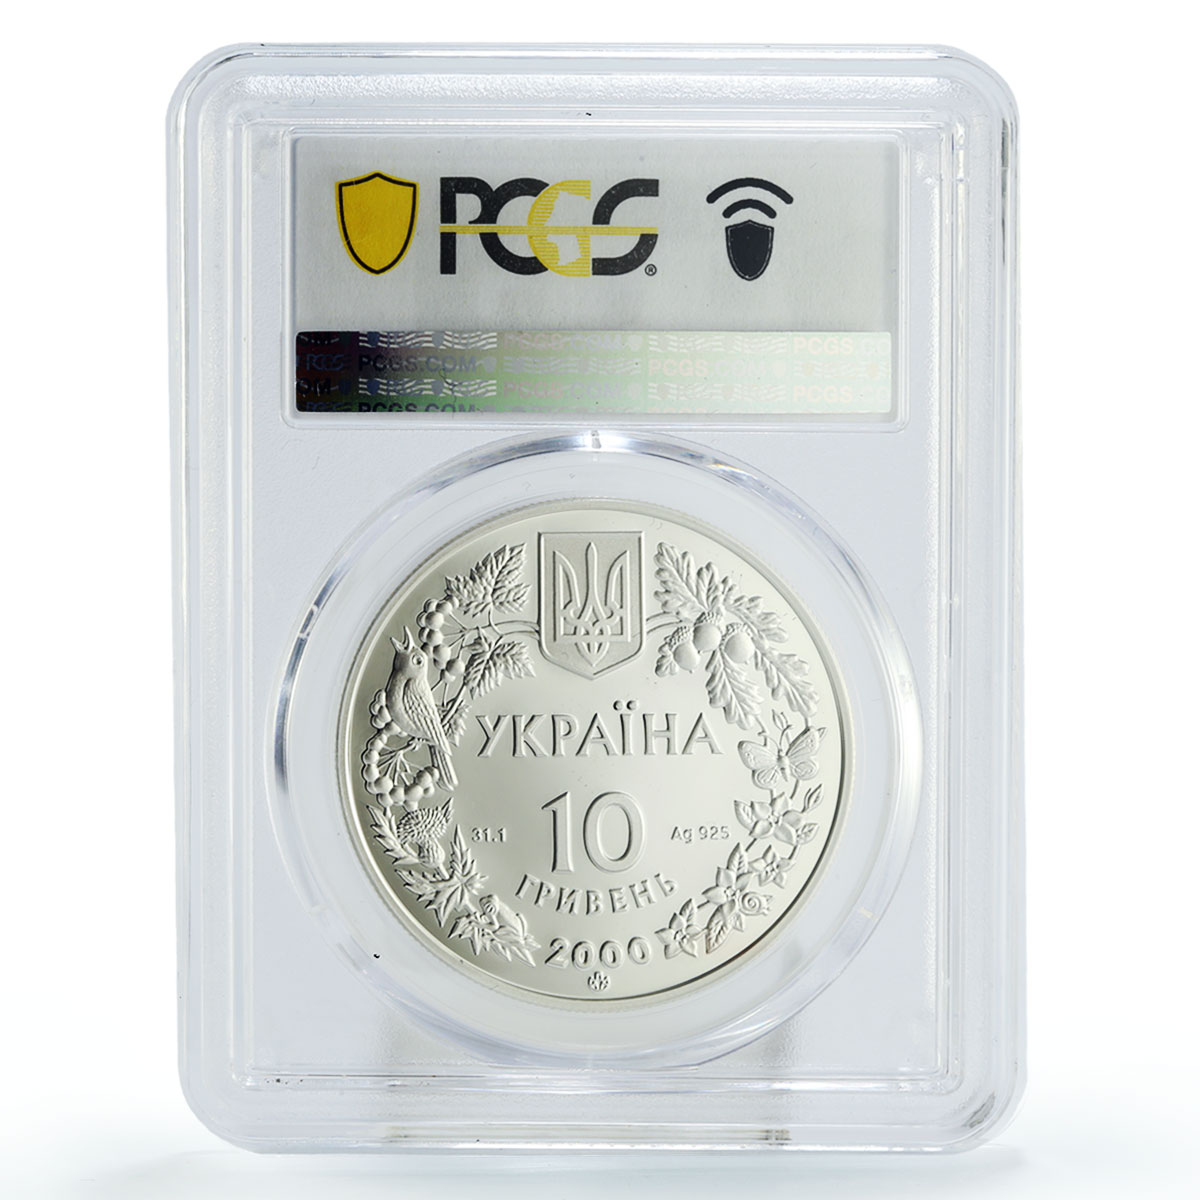 Ukraine 10 hryvnias Conservation Wildlife Crab Fauna PR70 PCGS silver coin 2000